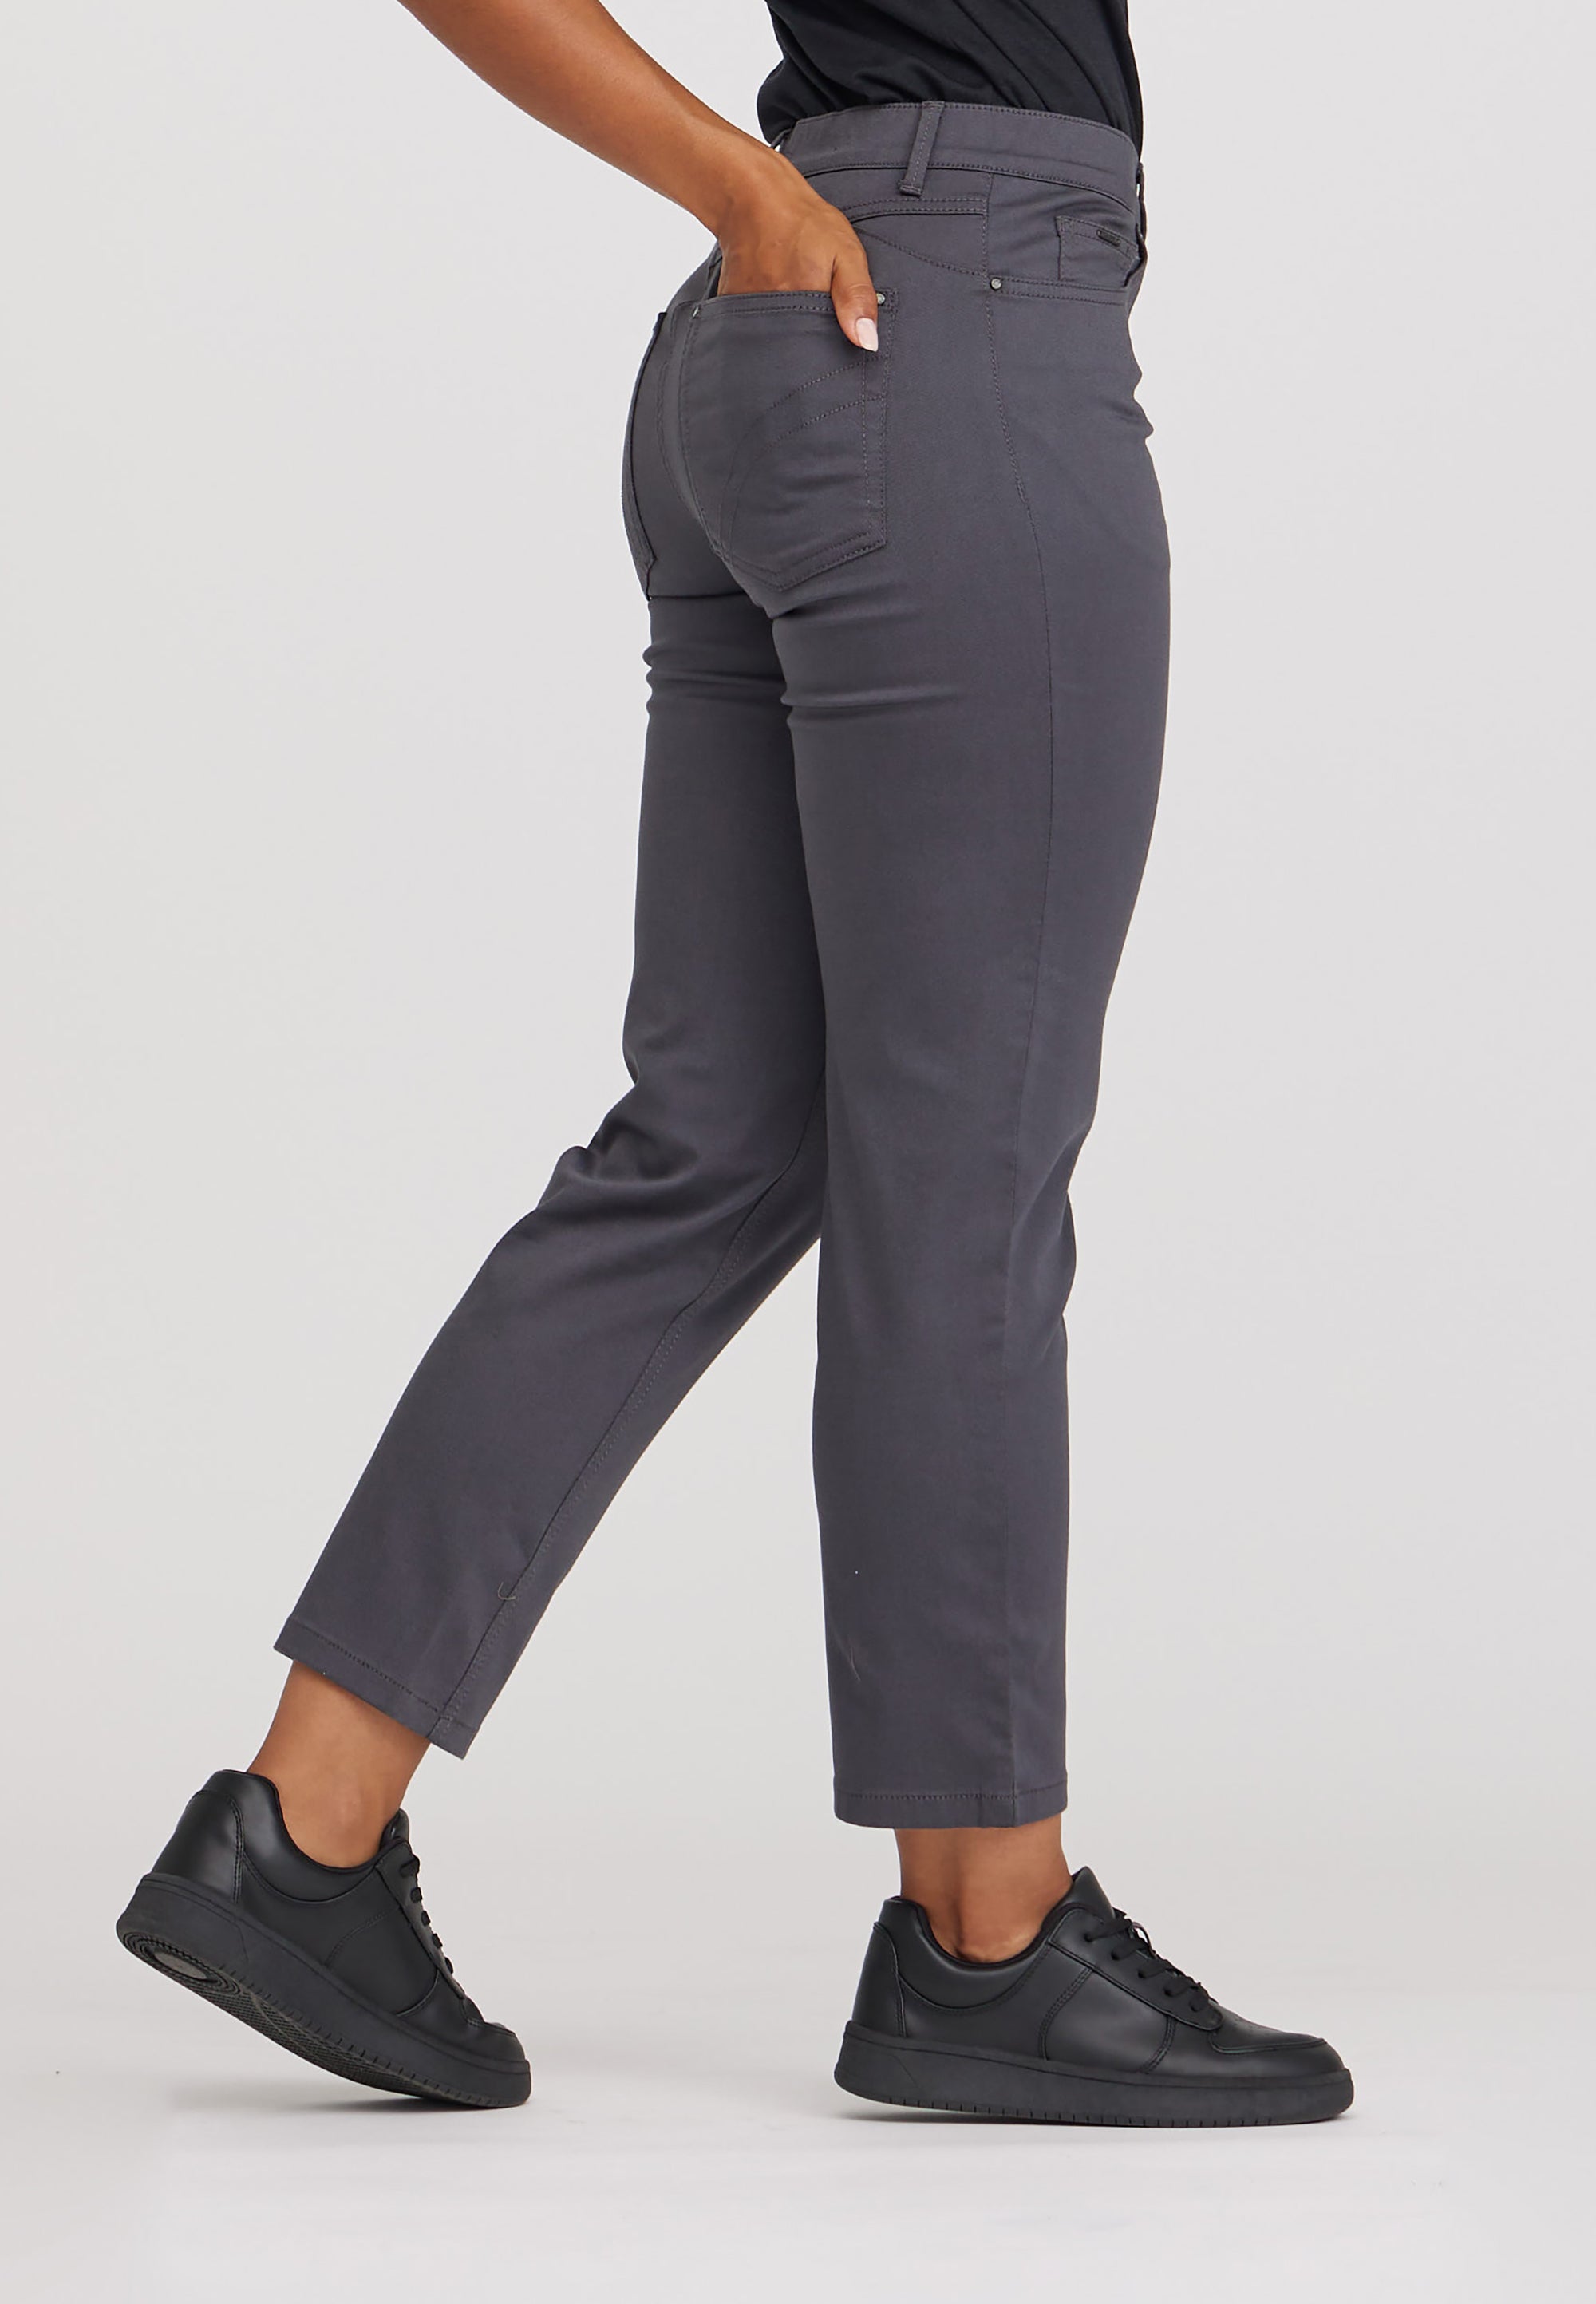 LAURIE Hannah Regular - Extra Short Length Trousers REGULAR 97000 Anthracite